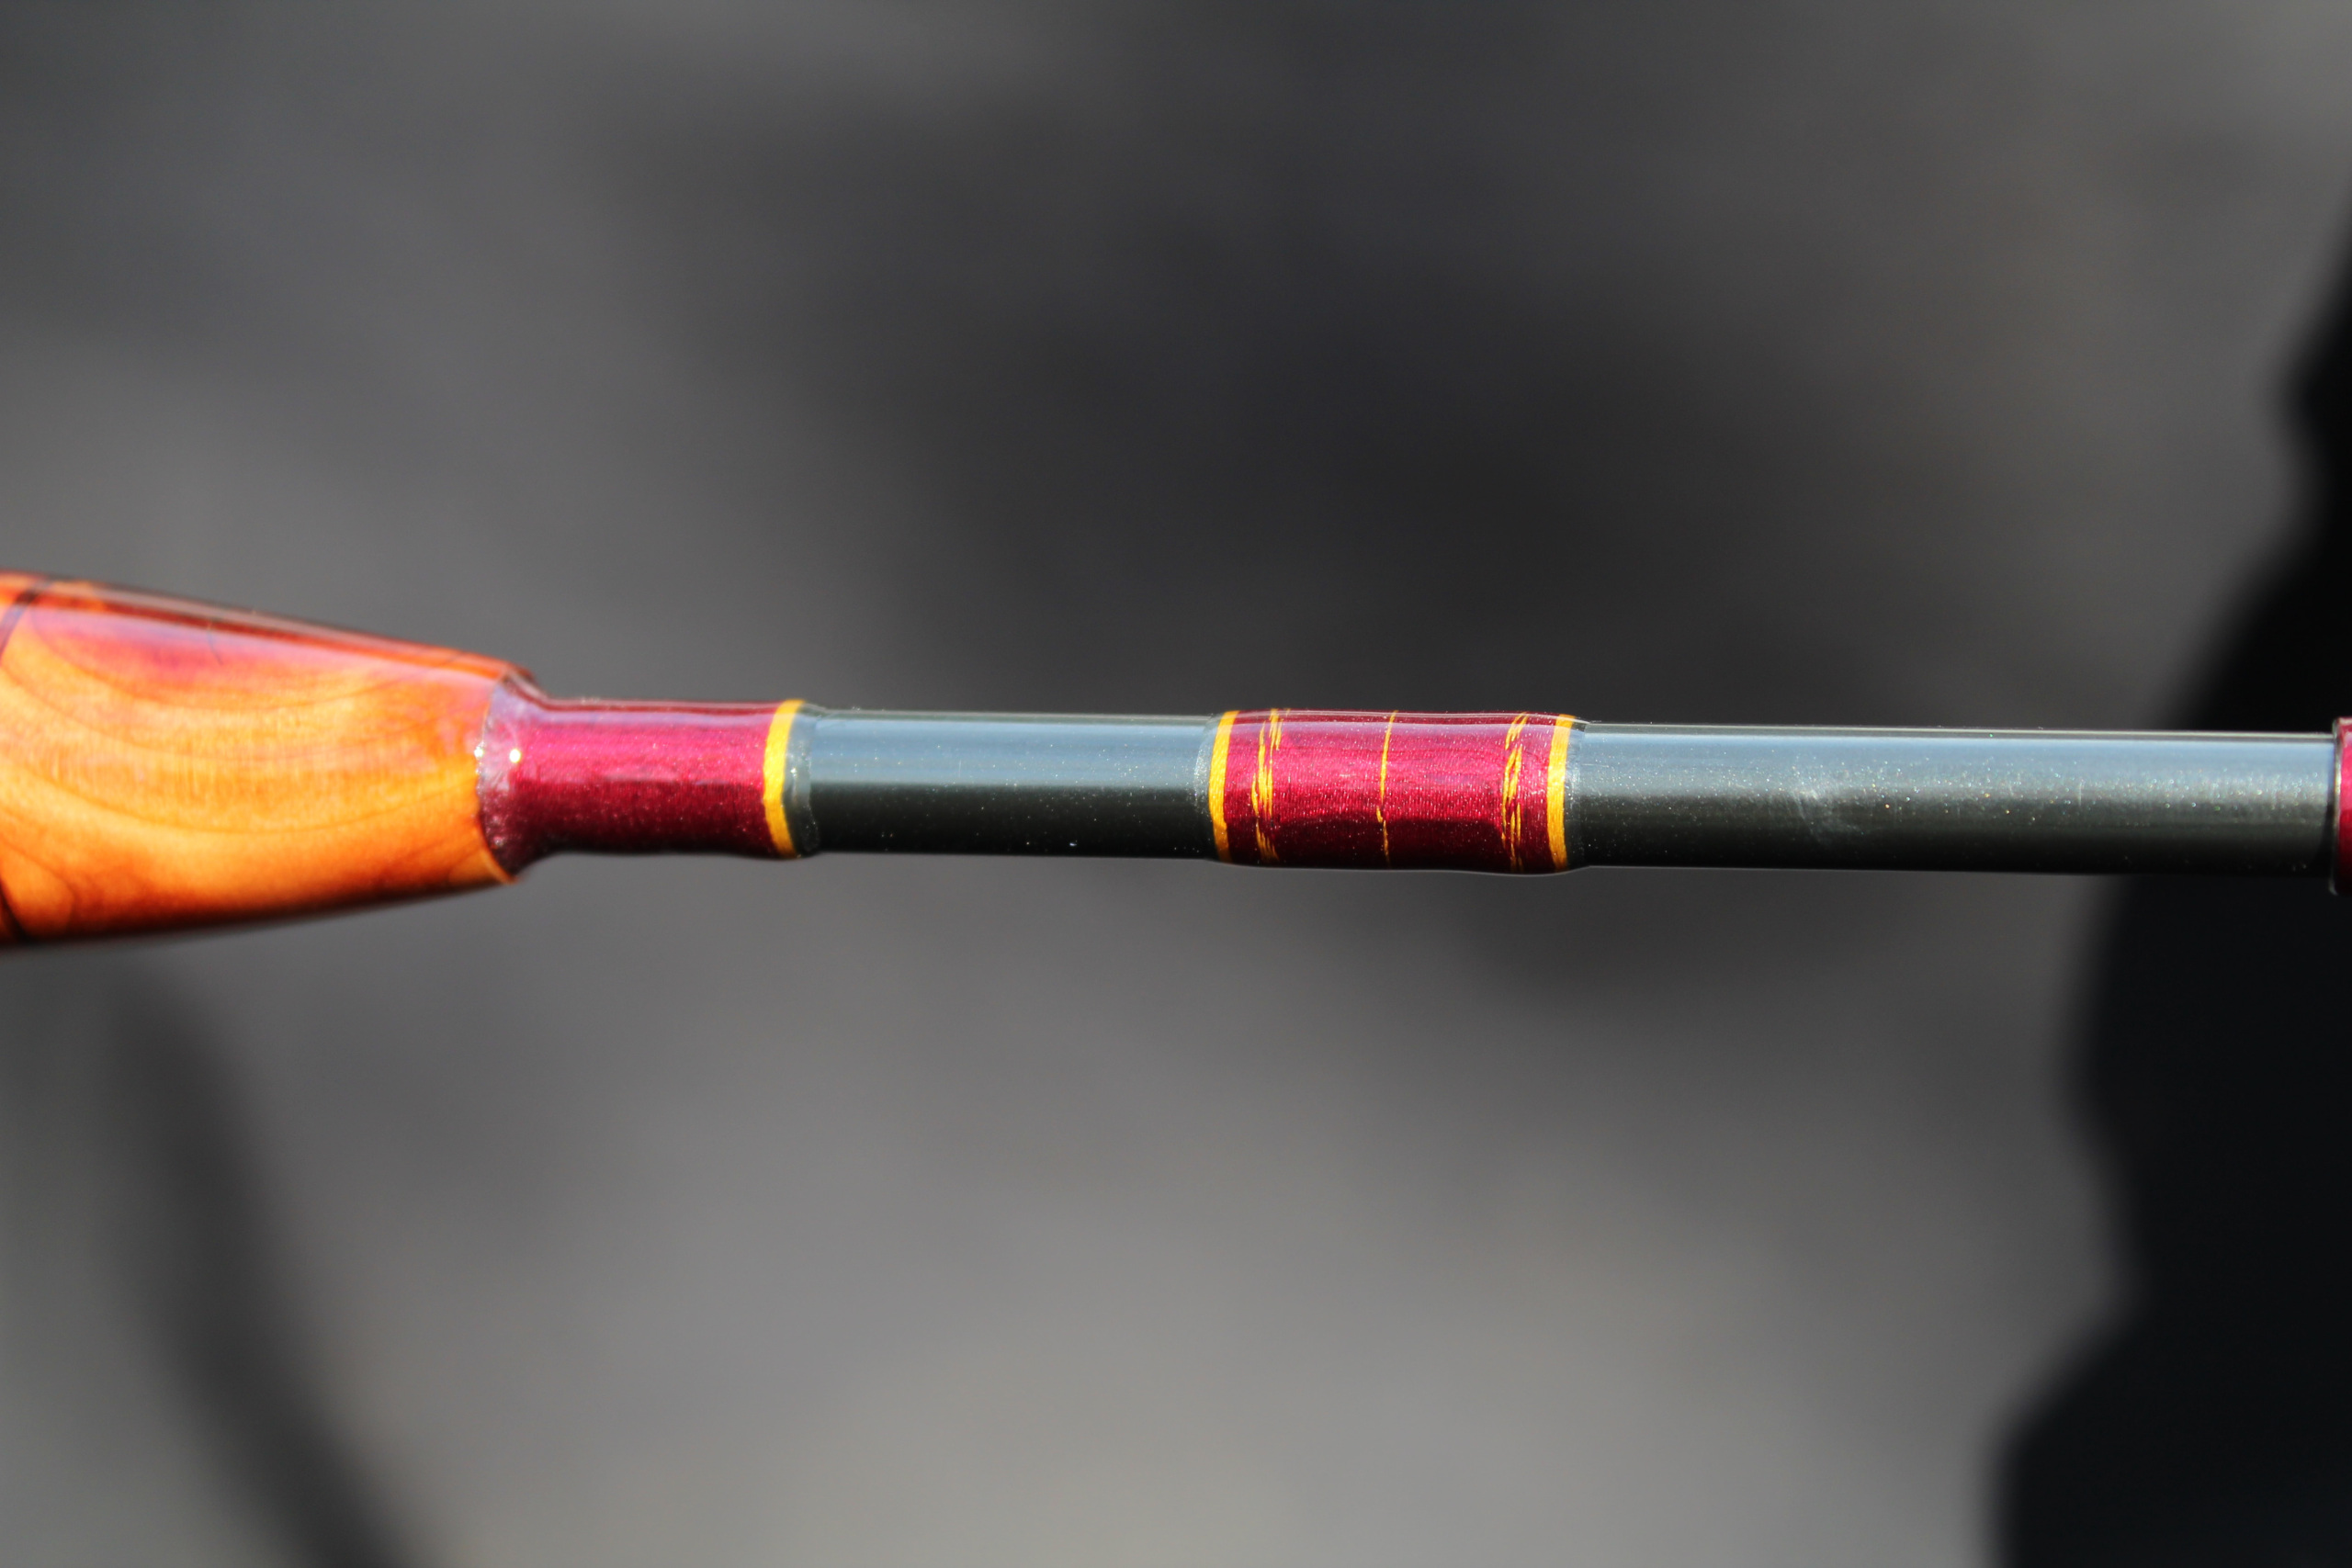 Custom Fishing Rods and Components - DLF CUSTOM FISHING RODS